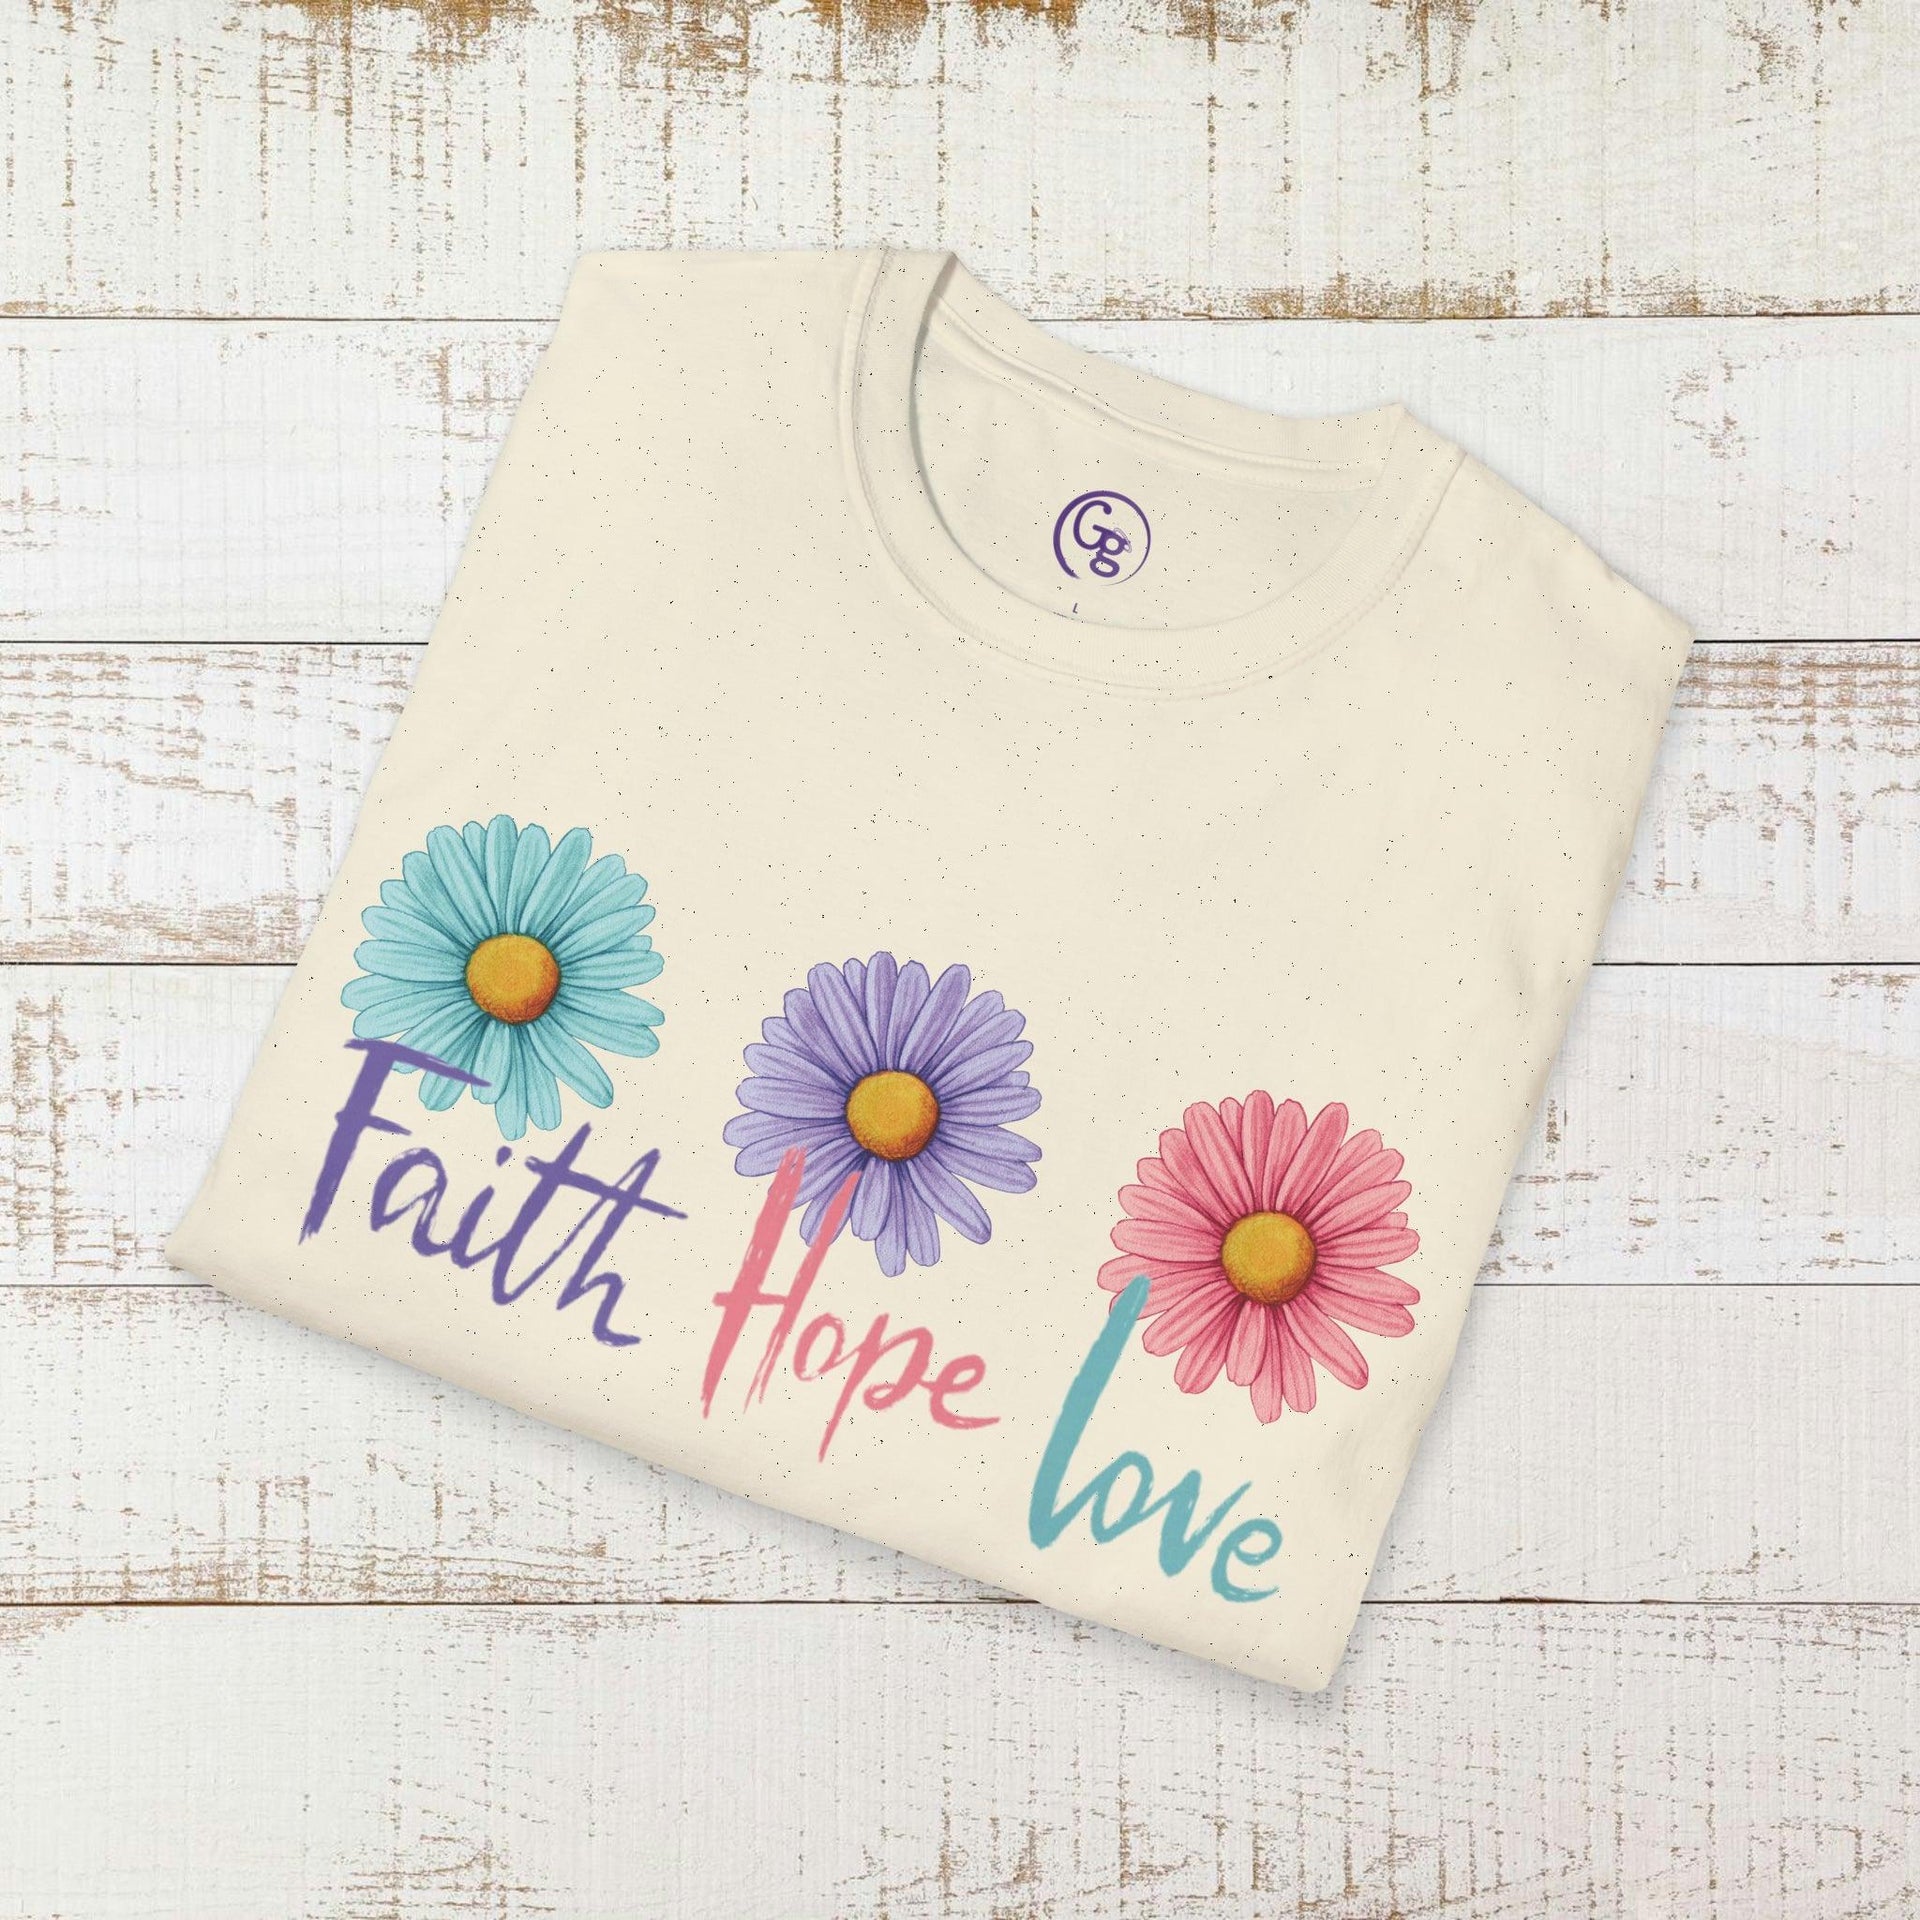 Daisy Faith Hope Love Graphic T-shirt - God's Girl Gifts And Apparel